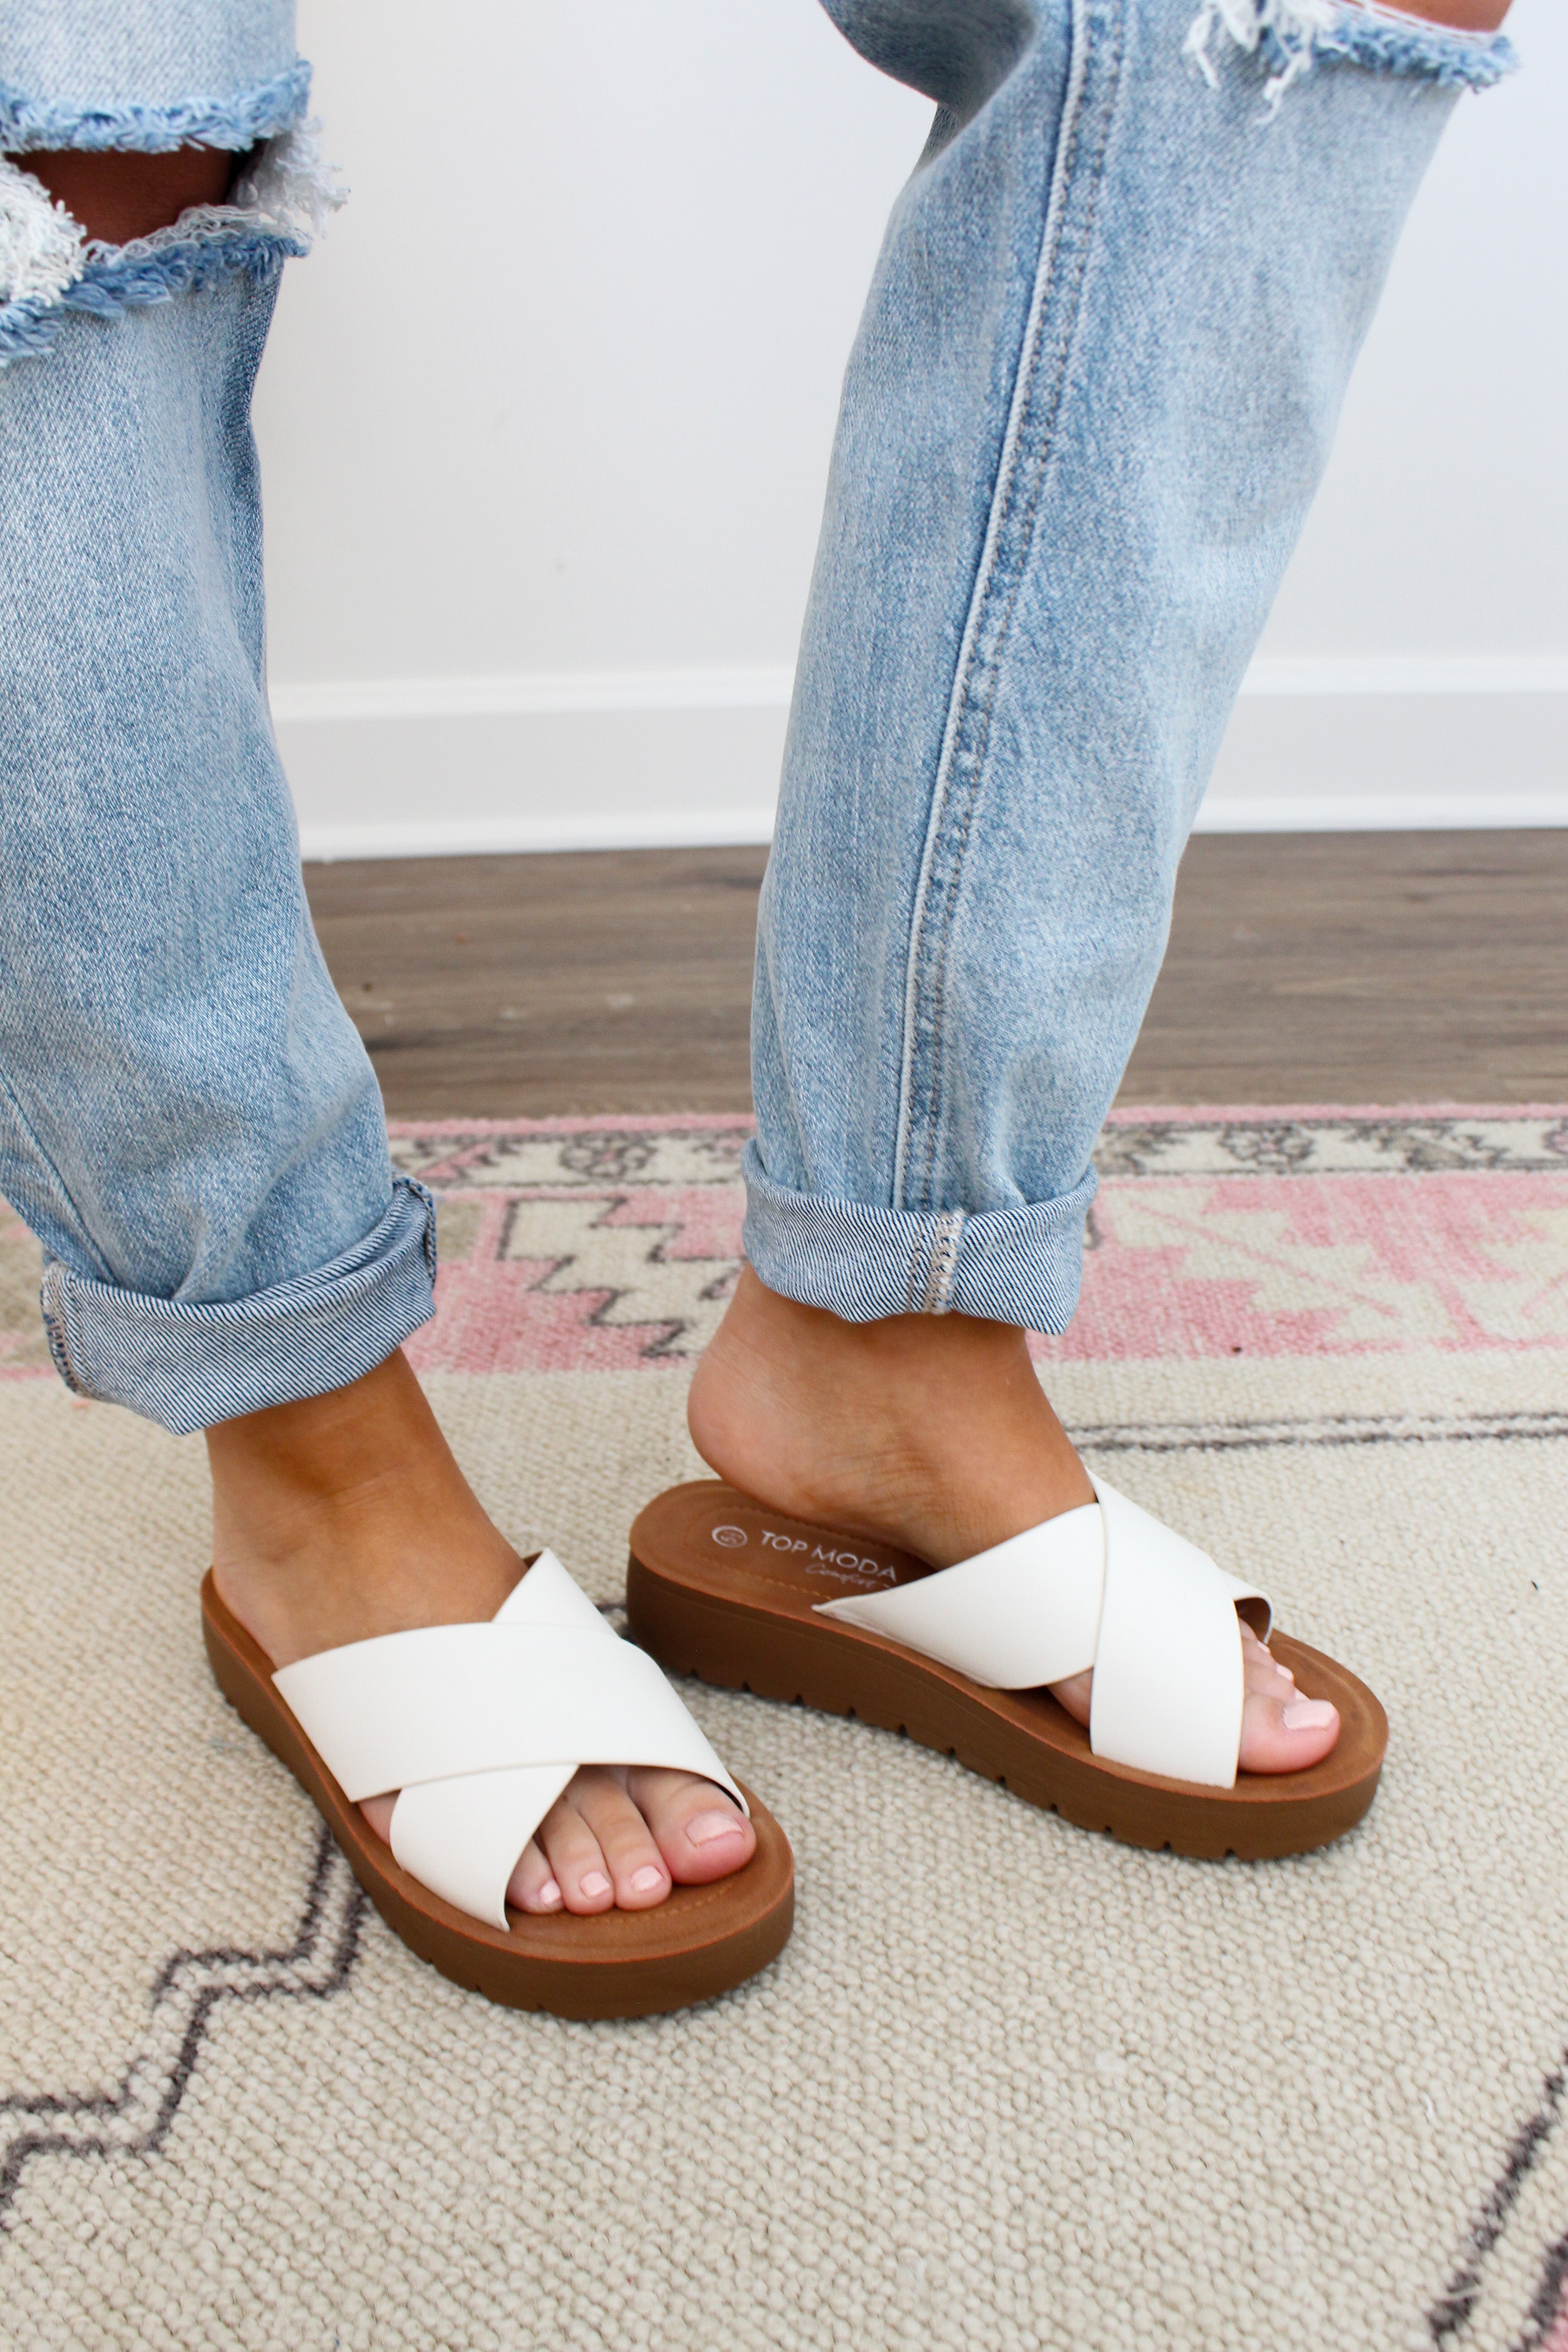  DREAM PAIRS Women's SDSS2224W Crisscross Open Toe Slide  Sandals Flat Comfort Slip on Sandals Beige White Size 6